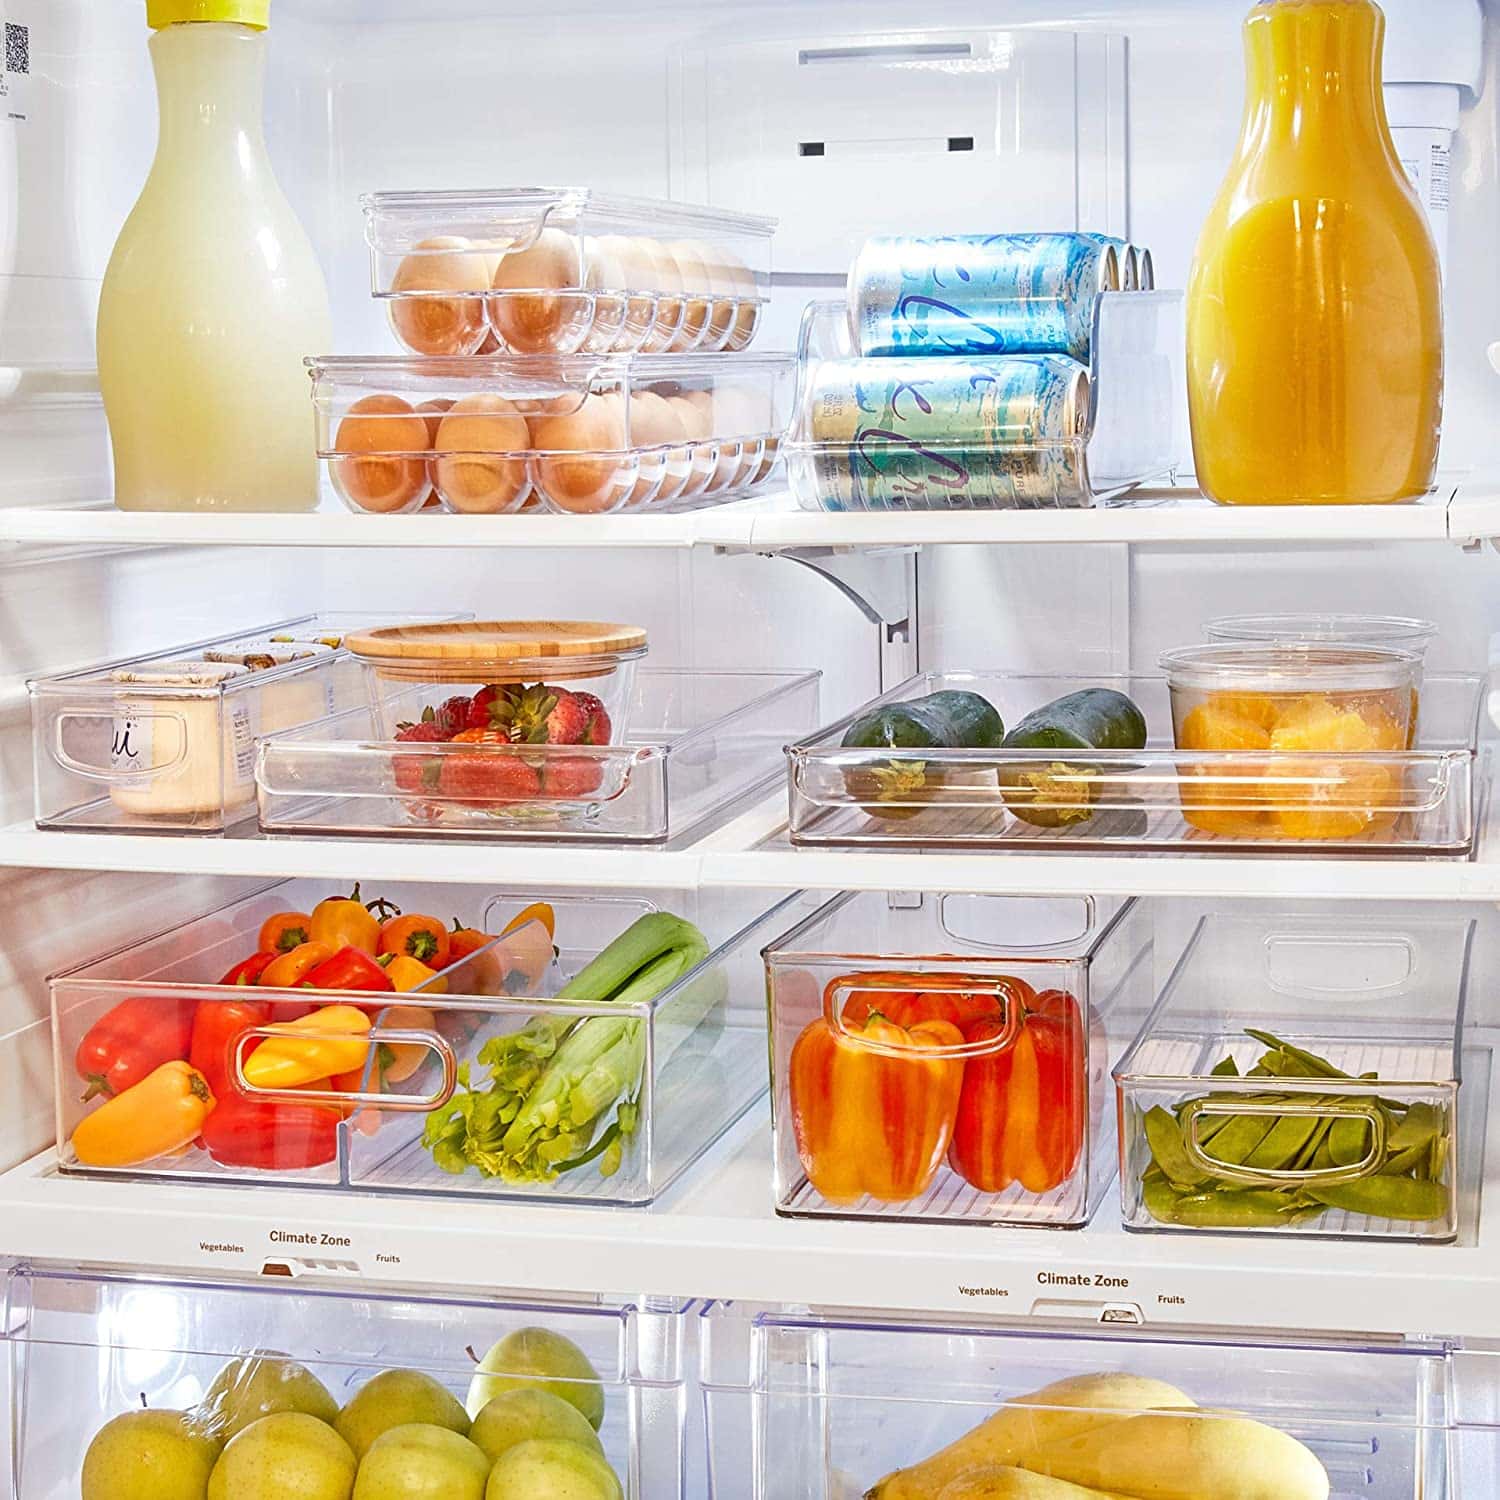 https://healthierspaces.com/wp-content/uploads/2021/08/Healthier-Spaces-iDesign-Plastic-Storage-Bin-wih-Handles-for-Kitchen-03.jpg